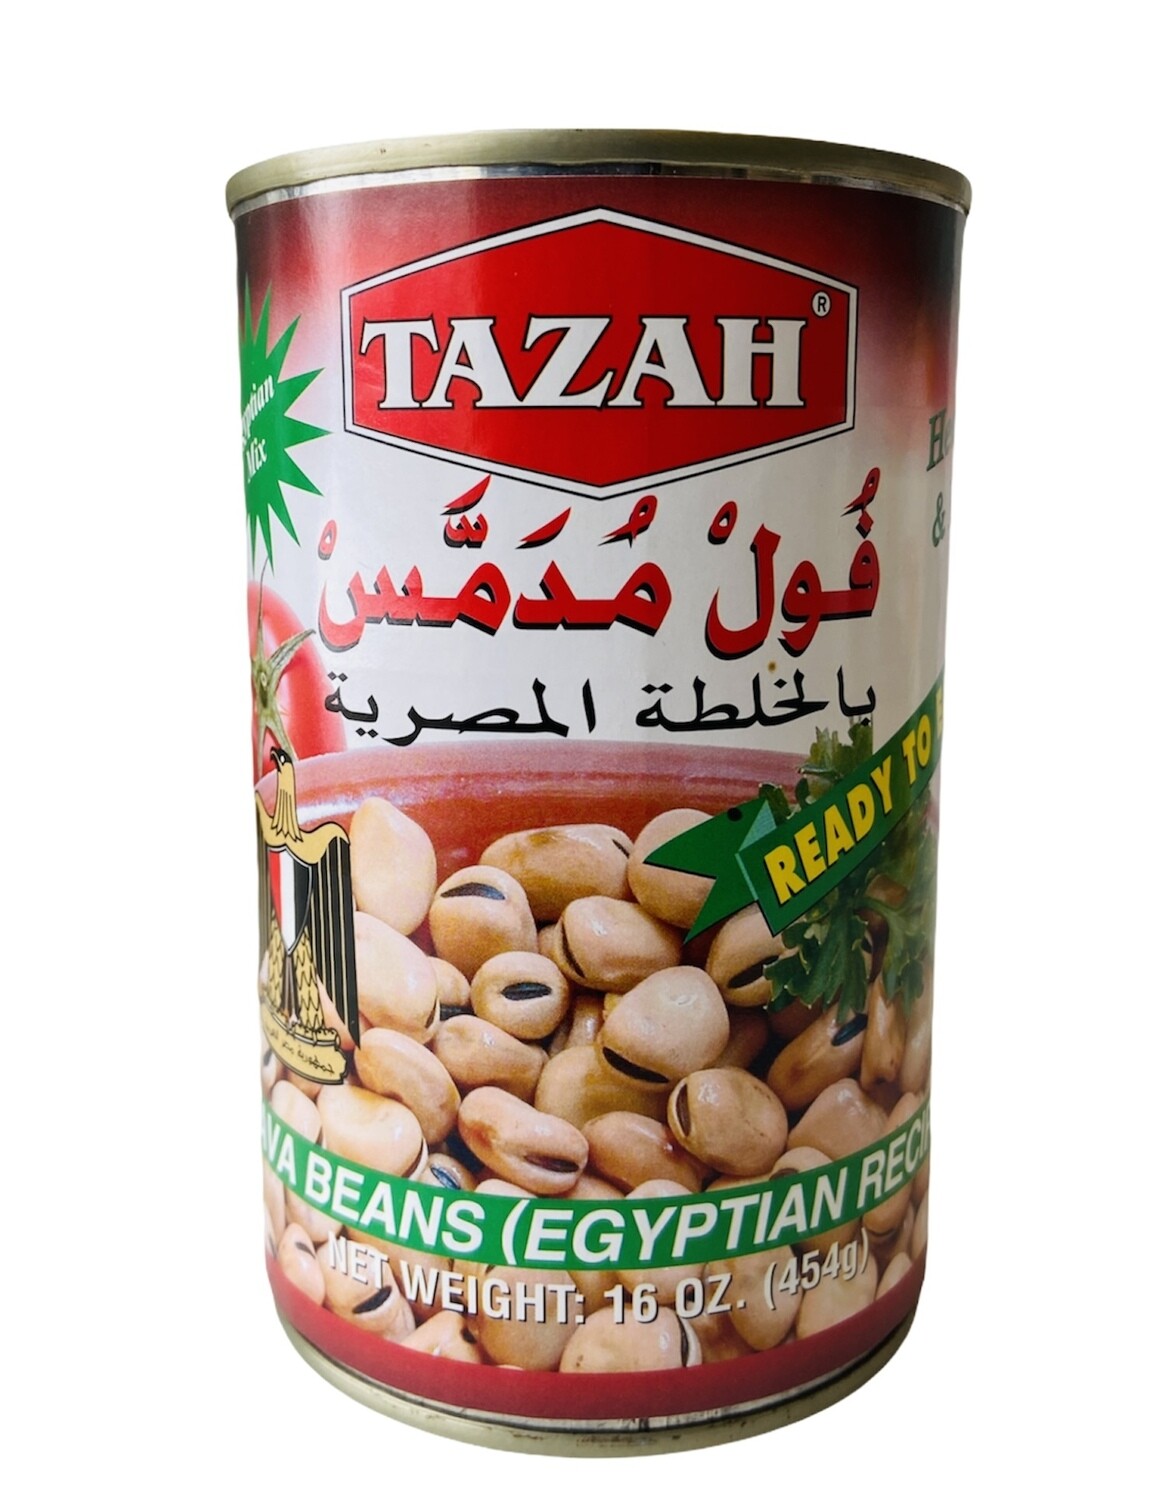 Tazah Fava Beans Egyption Recipe 24x16oz